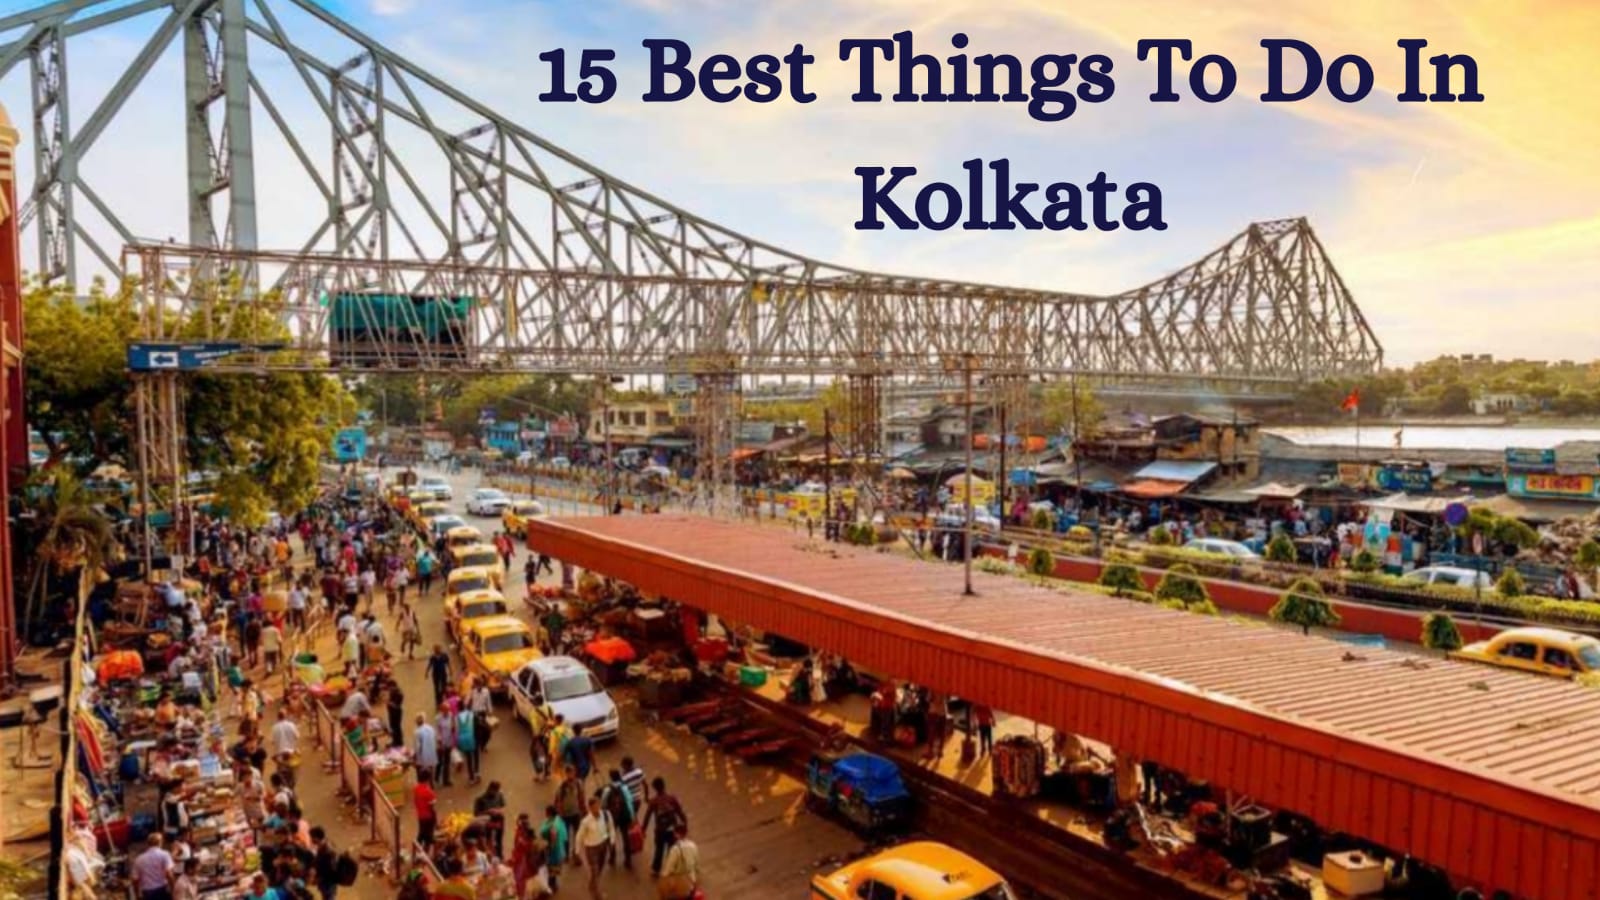 15 Best Things To Do In Kolkata